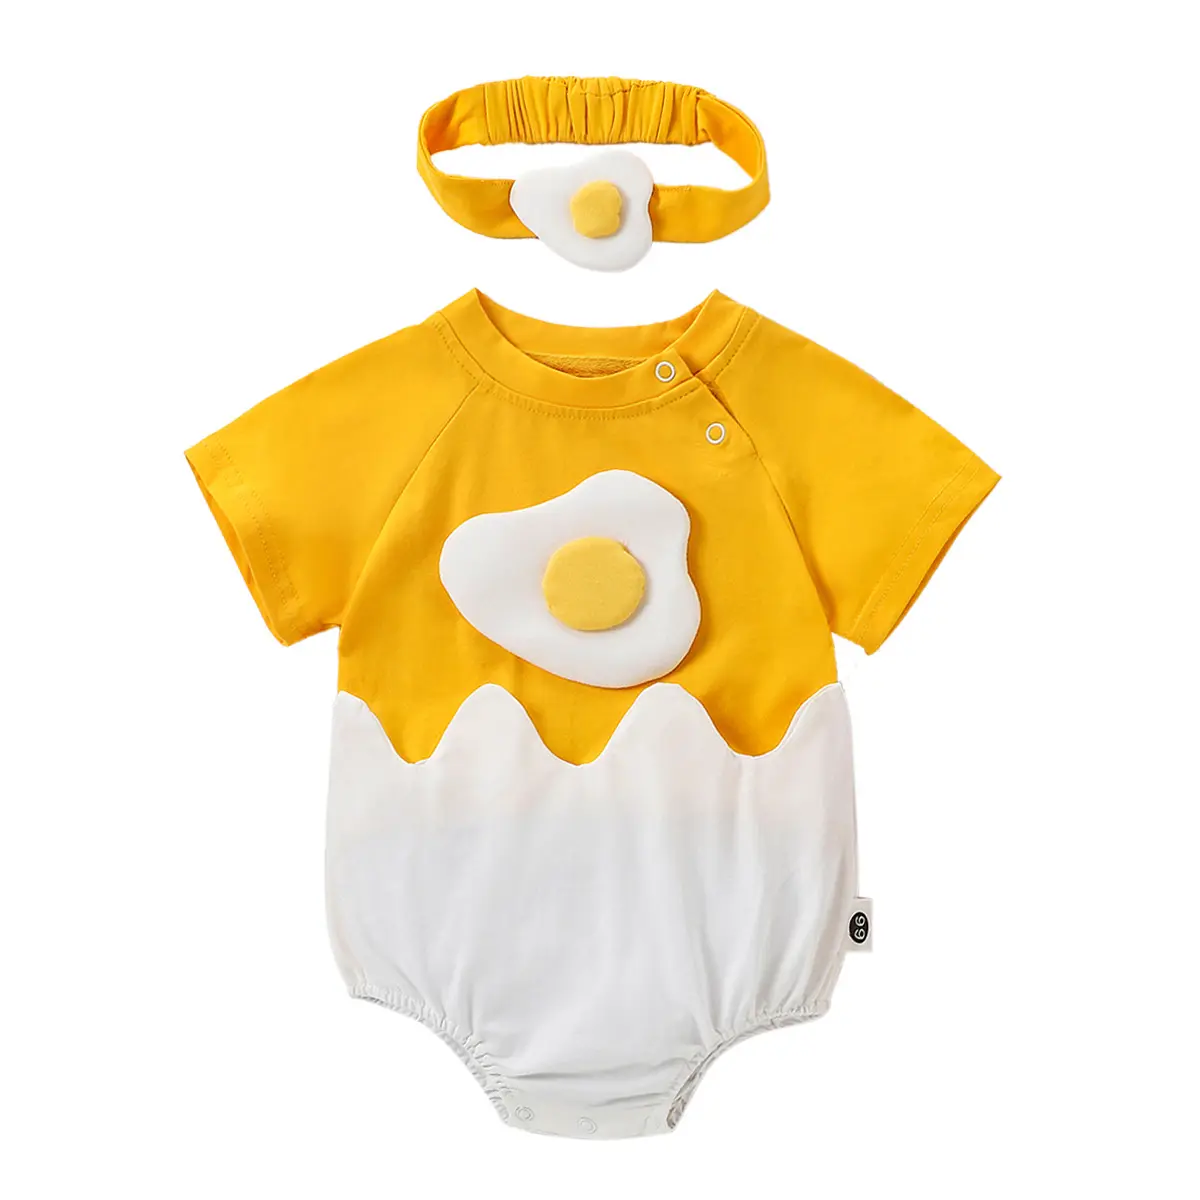 Infant New Egg Baby Cartoon Romper Clothes